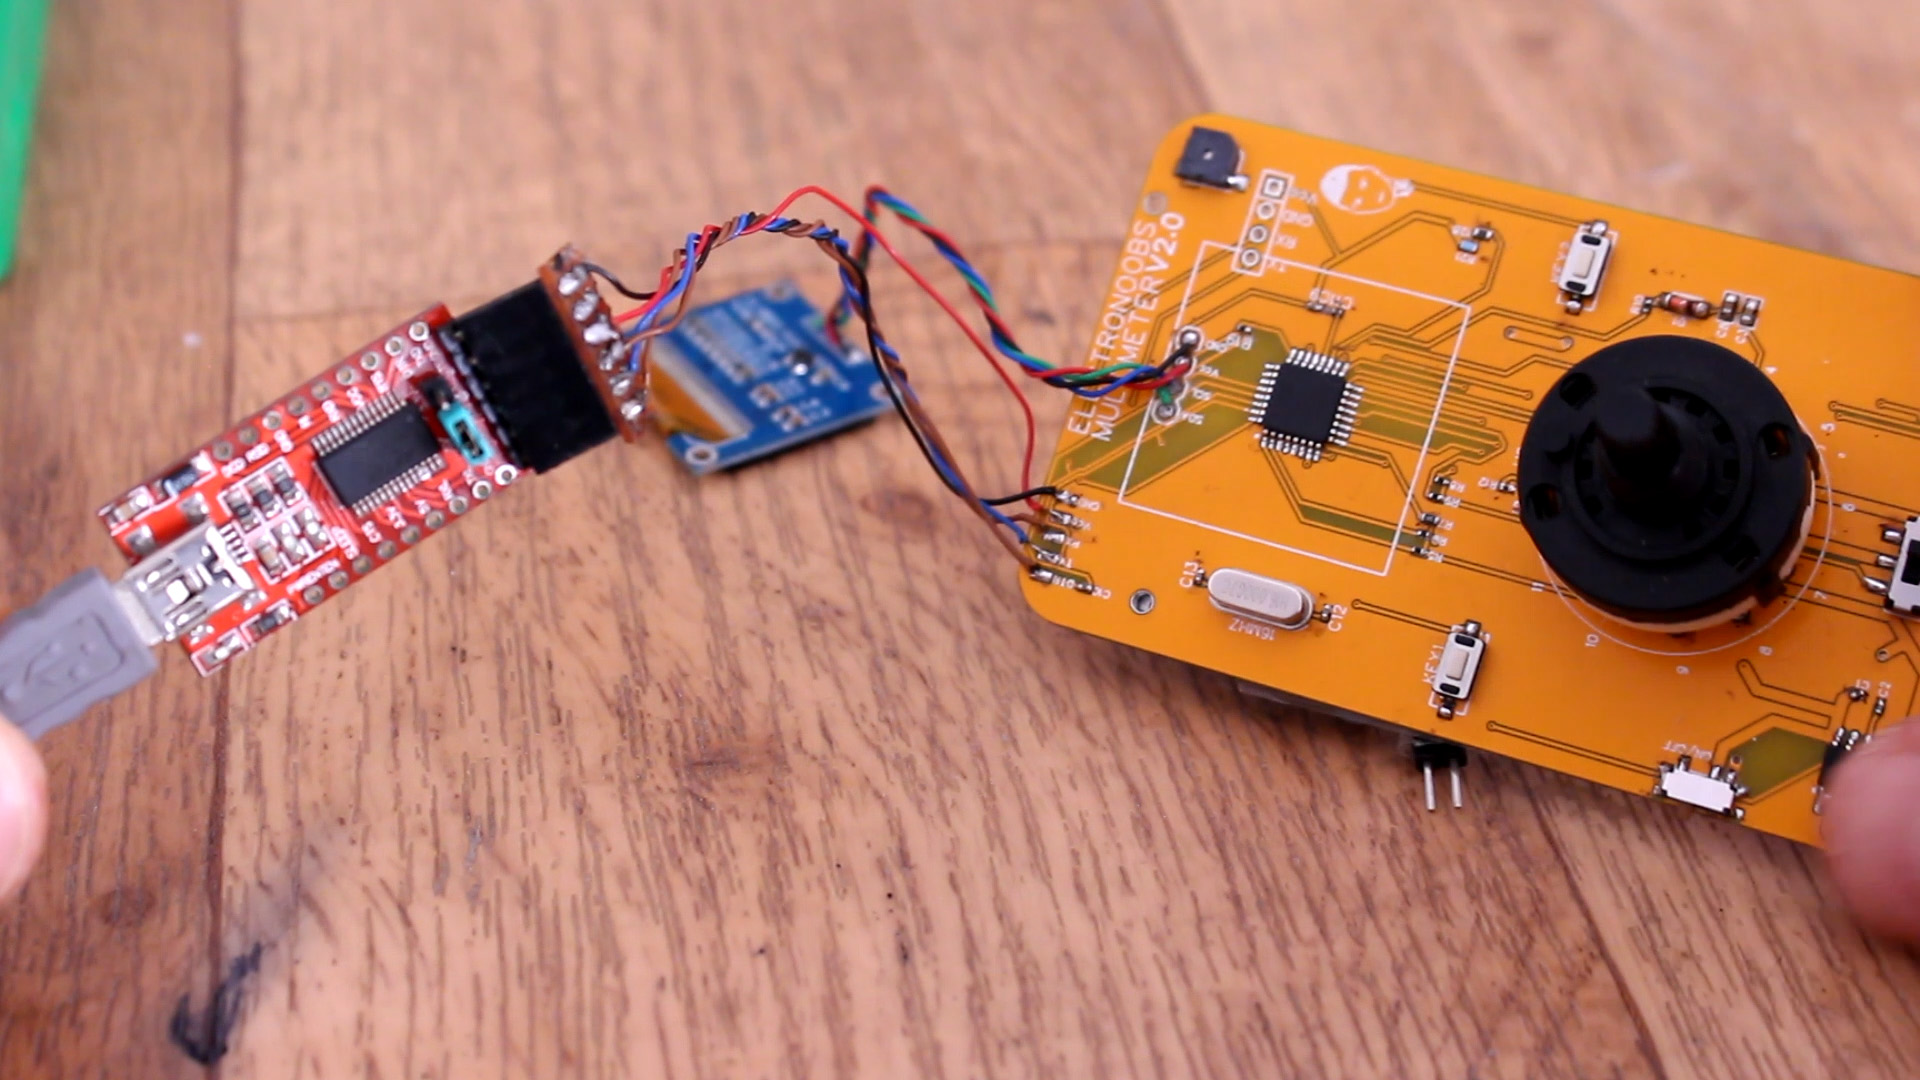 Arduino digital multimeter and tester DIY